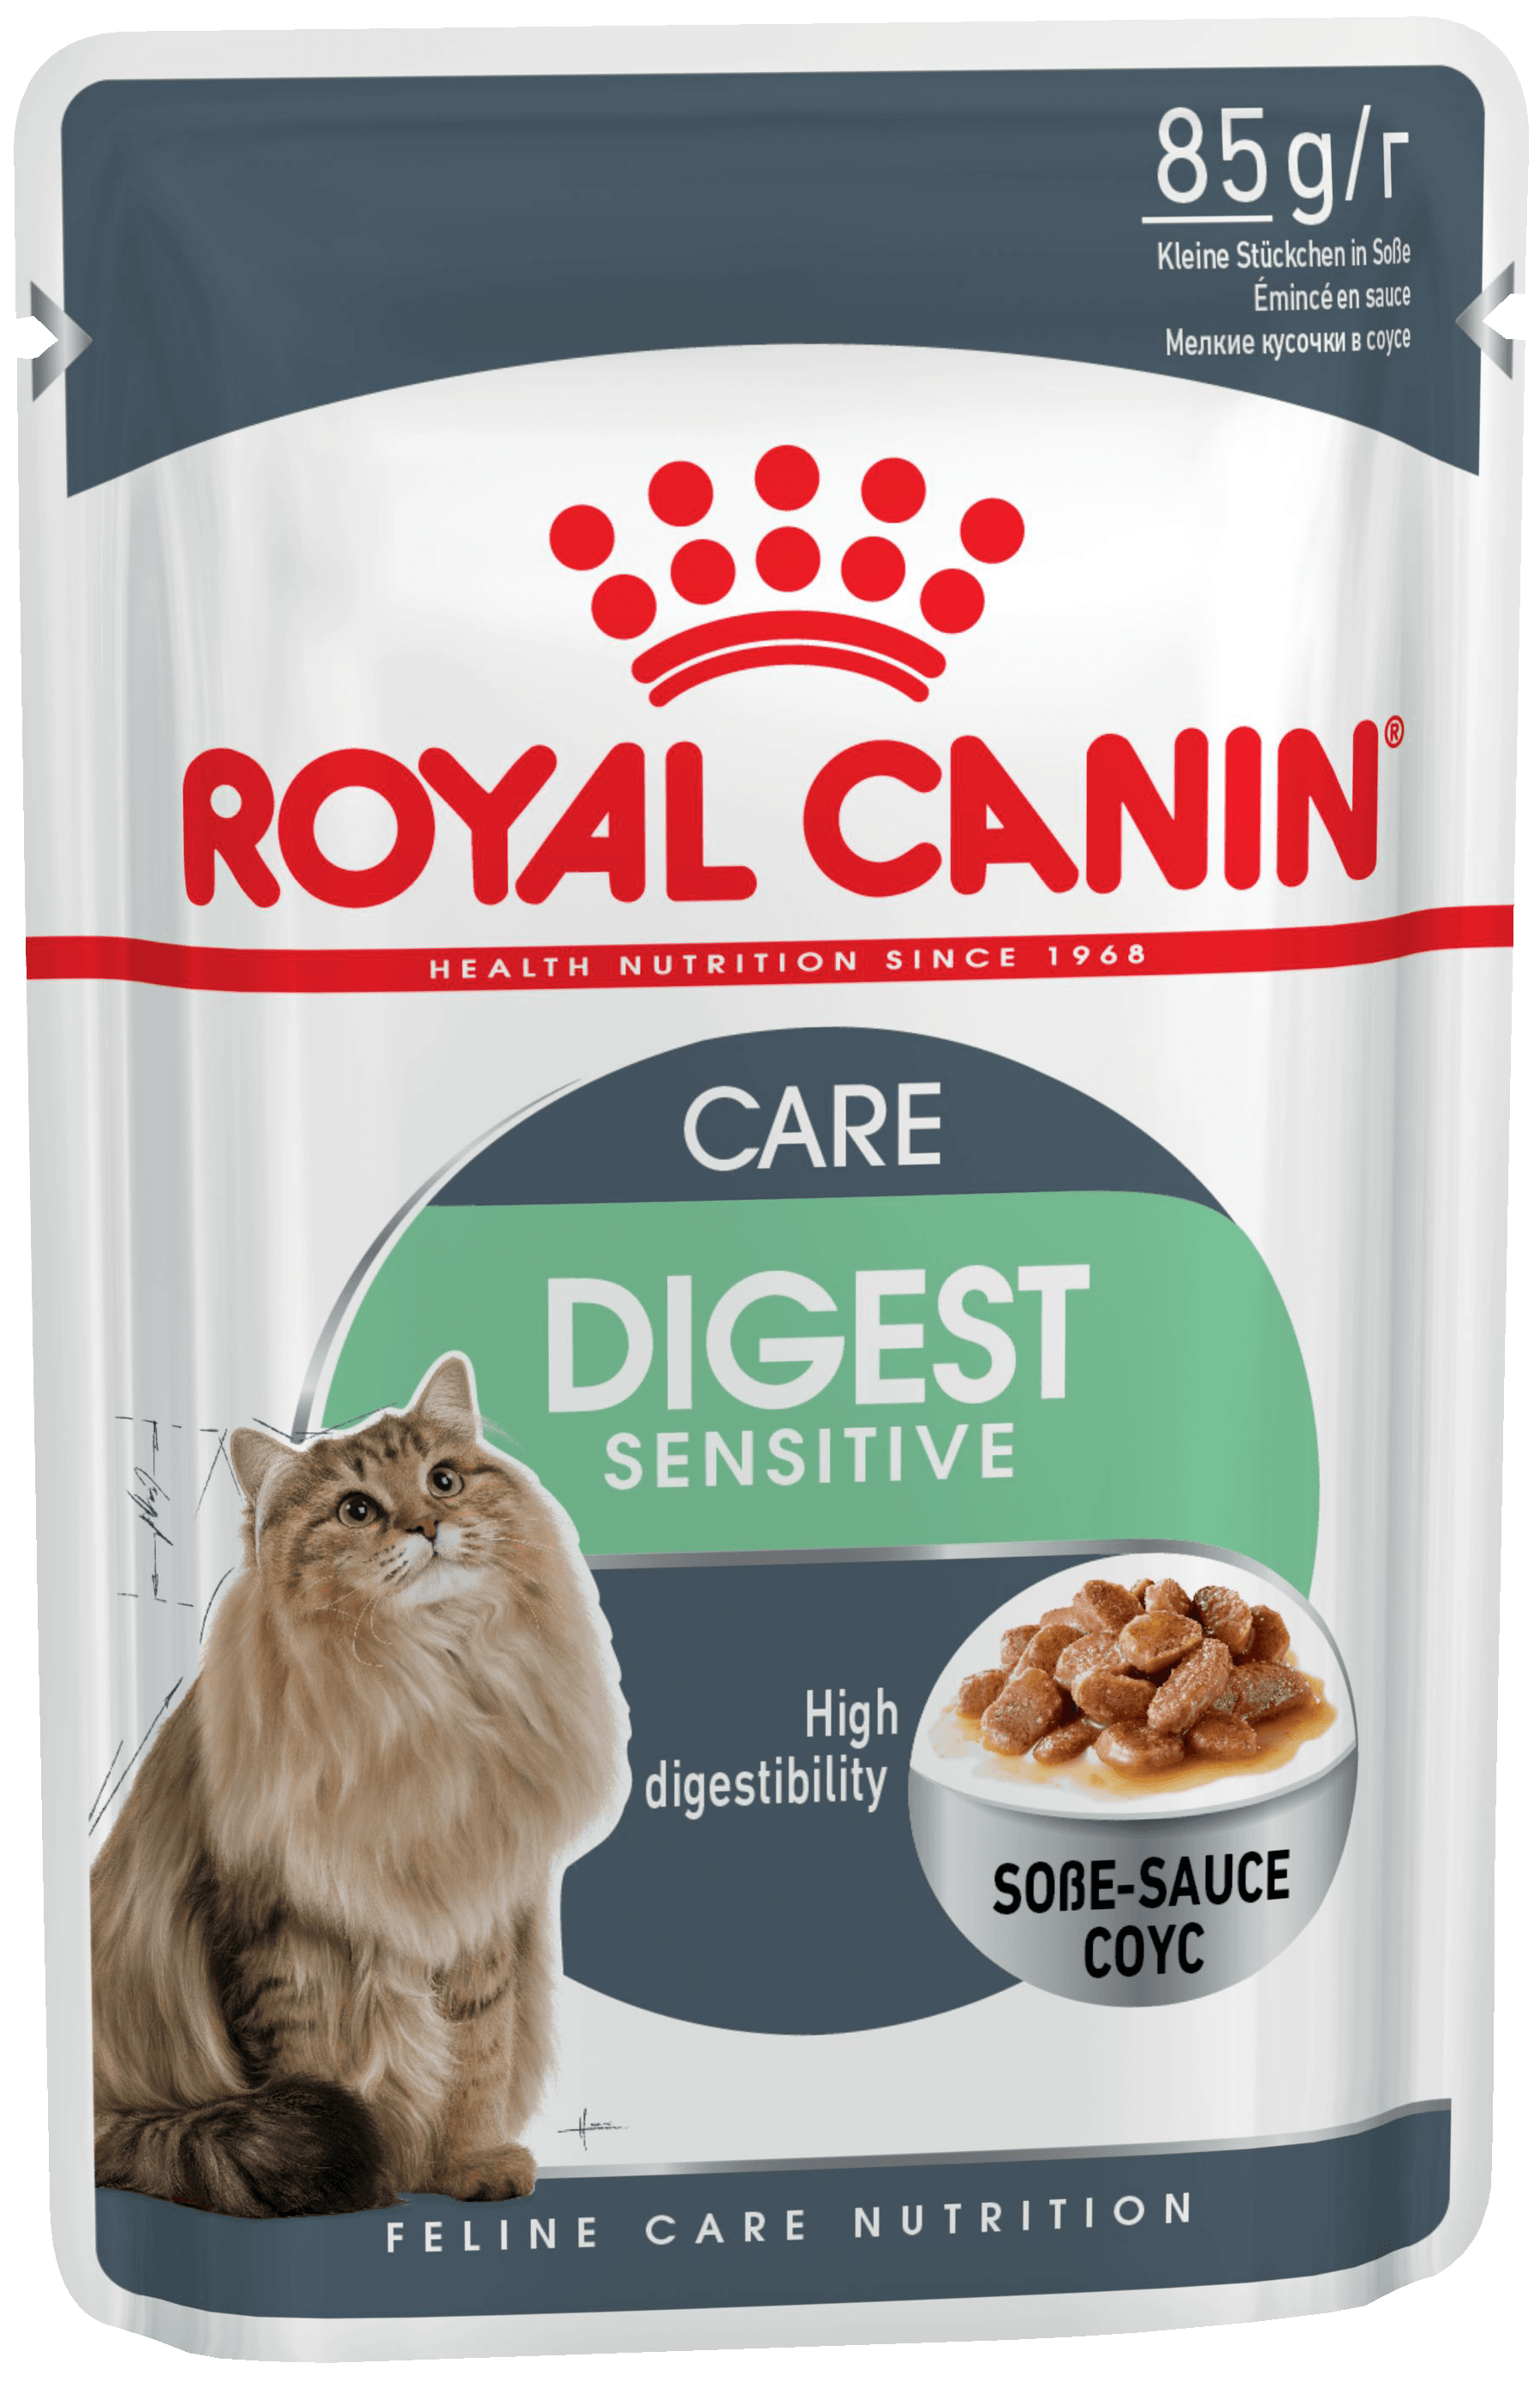 Royal Canin DIGEST SENSITIVE